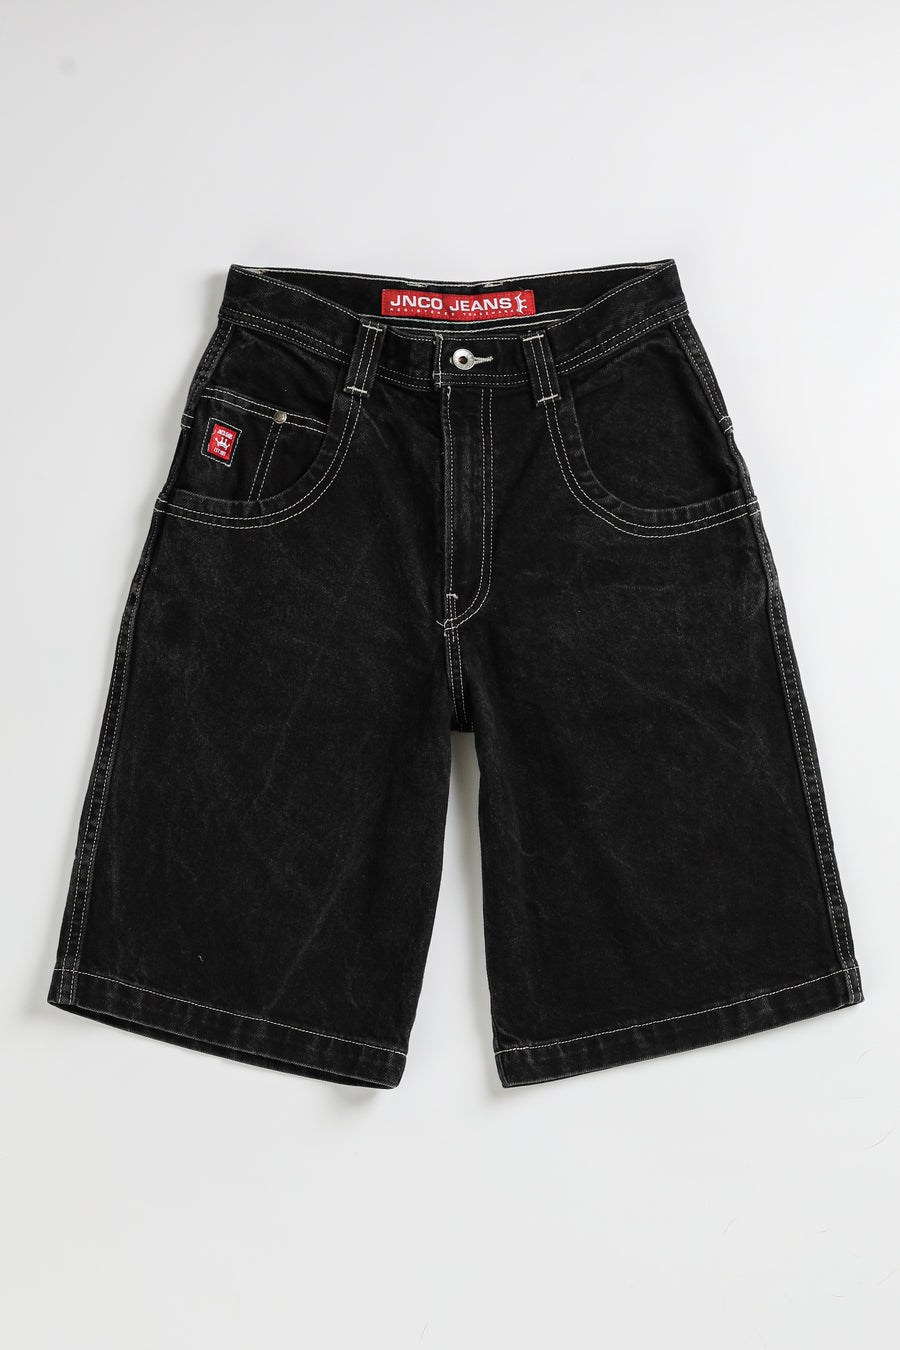 Vintage JNCO Denim Shorts - W29